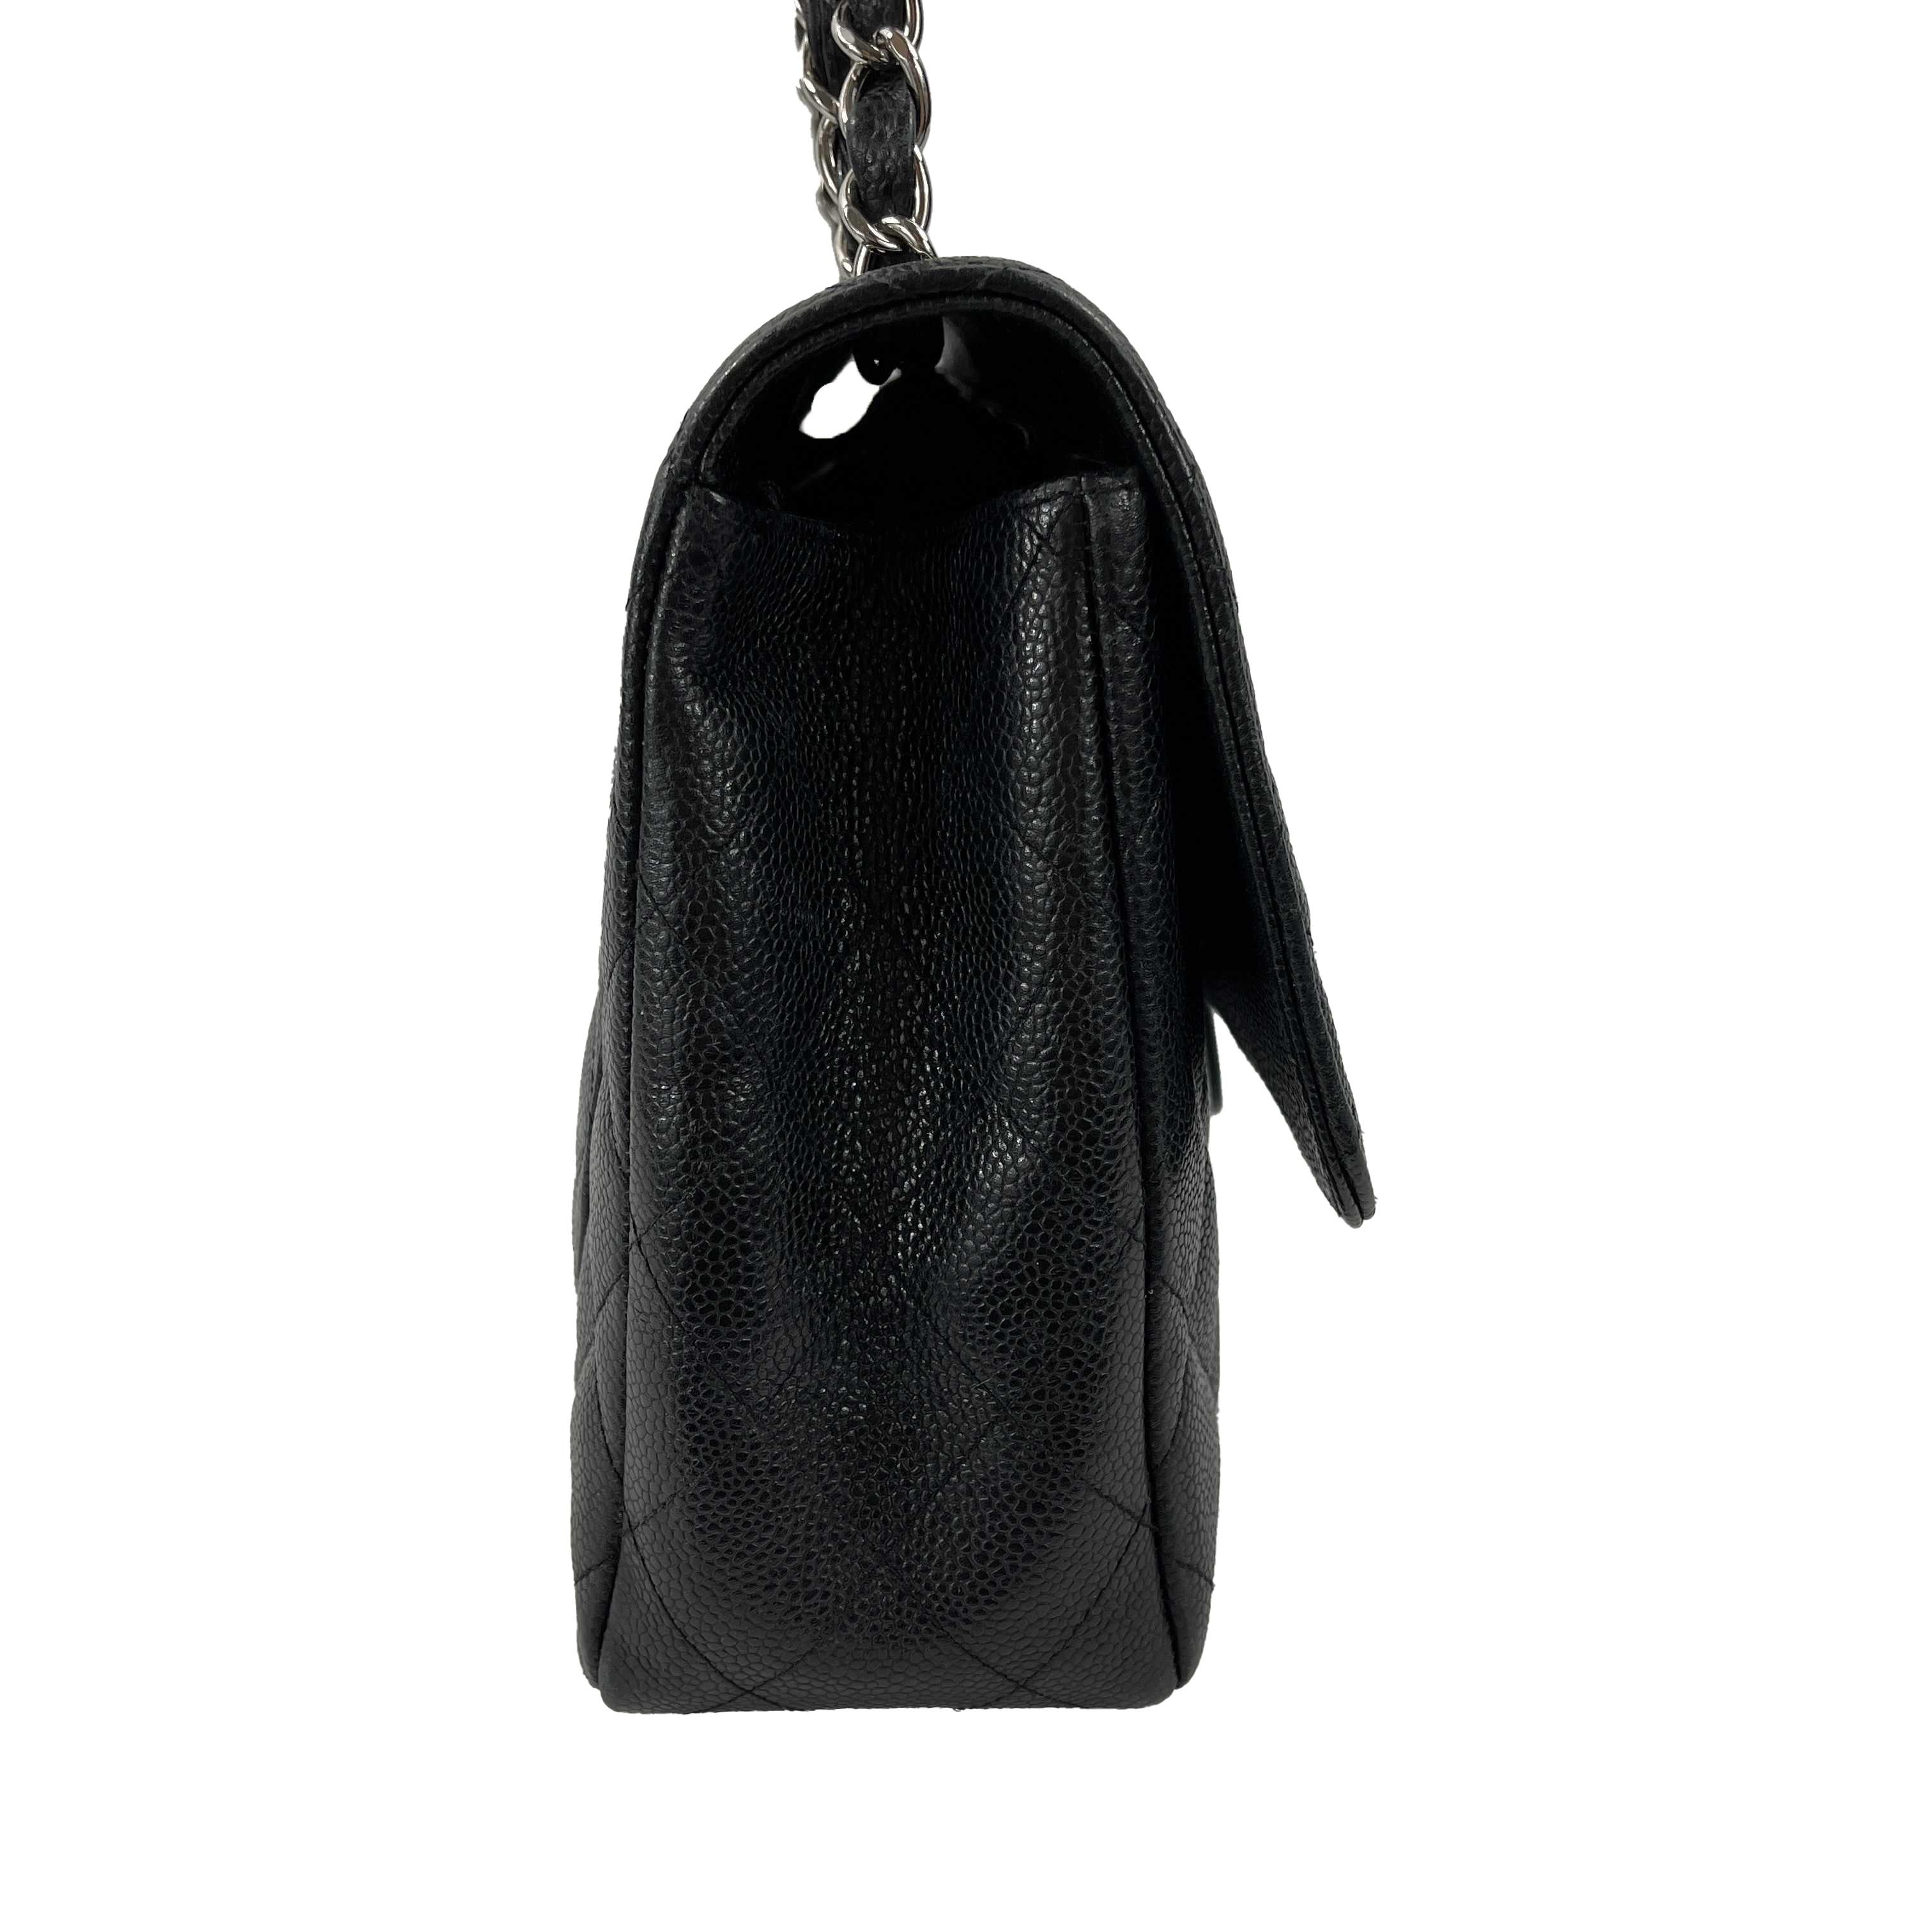 CHANEL - Jumbo Caviar Leather CC Classic Flap - Black / Silver Shoulder Bag 4